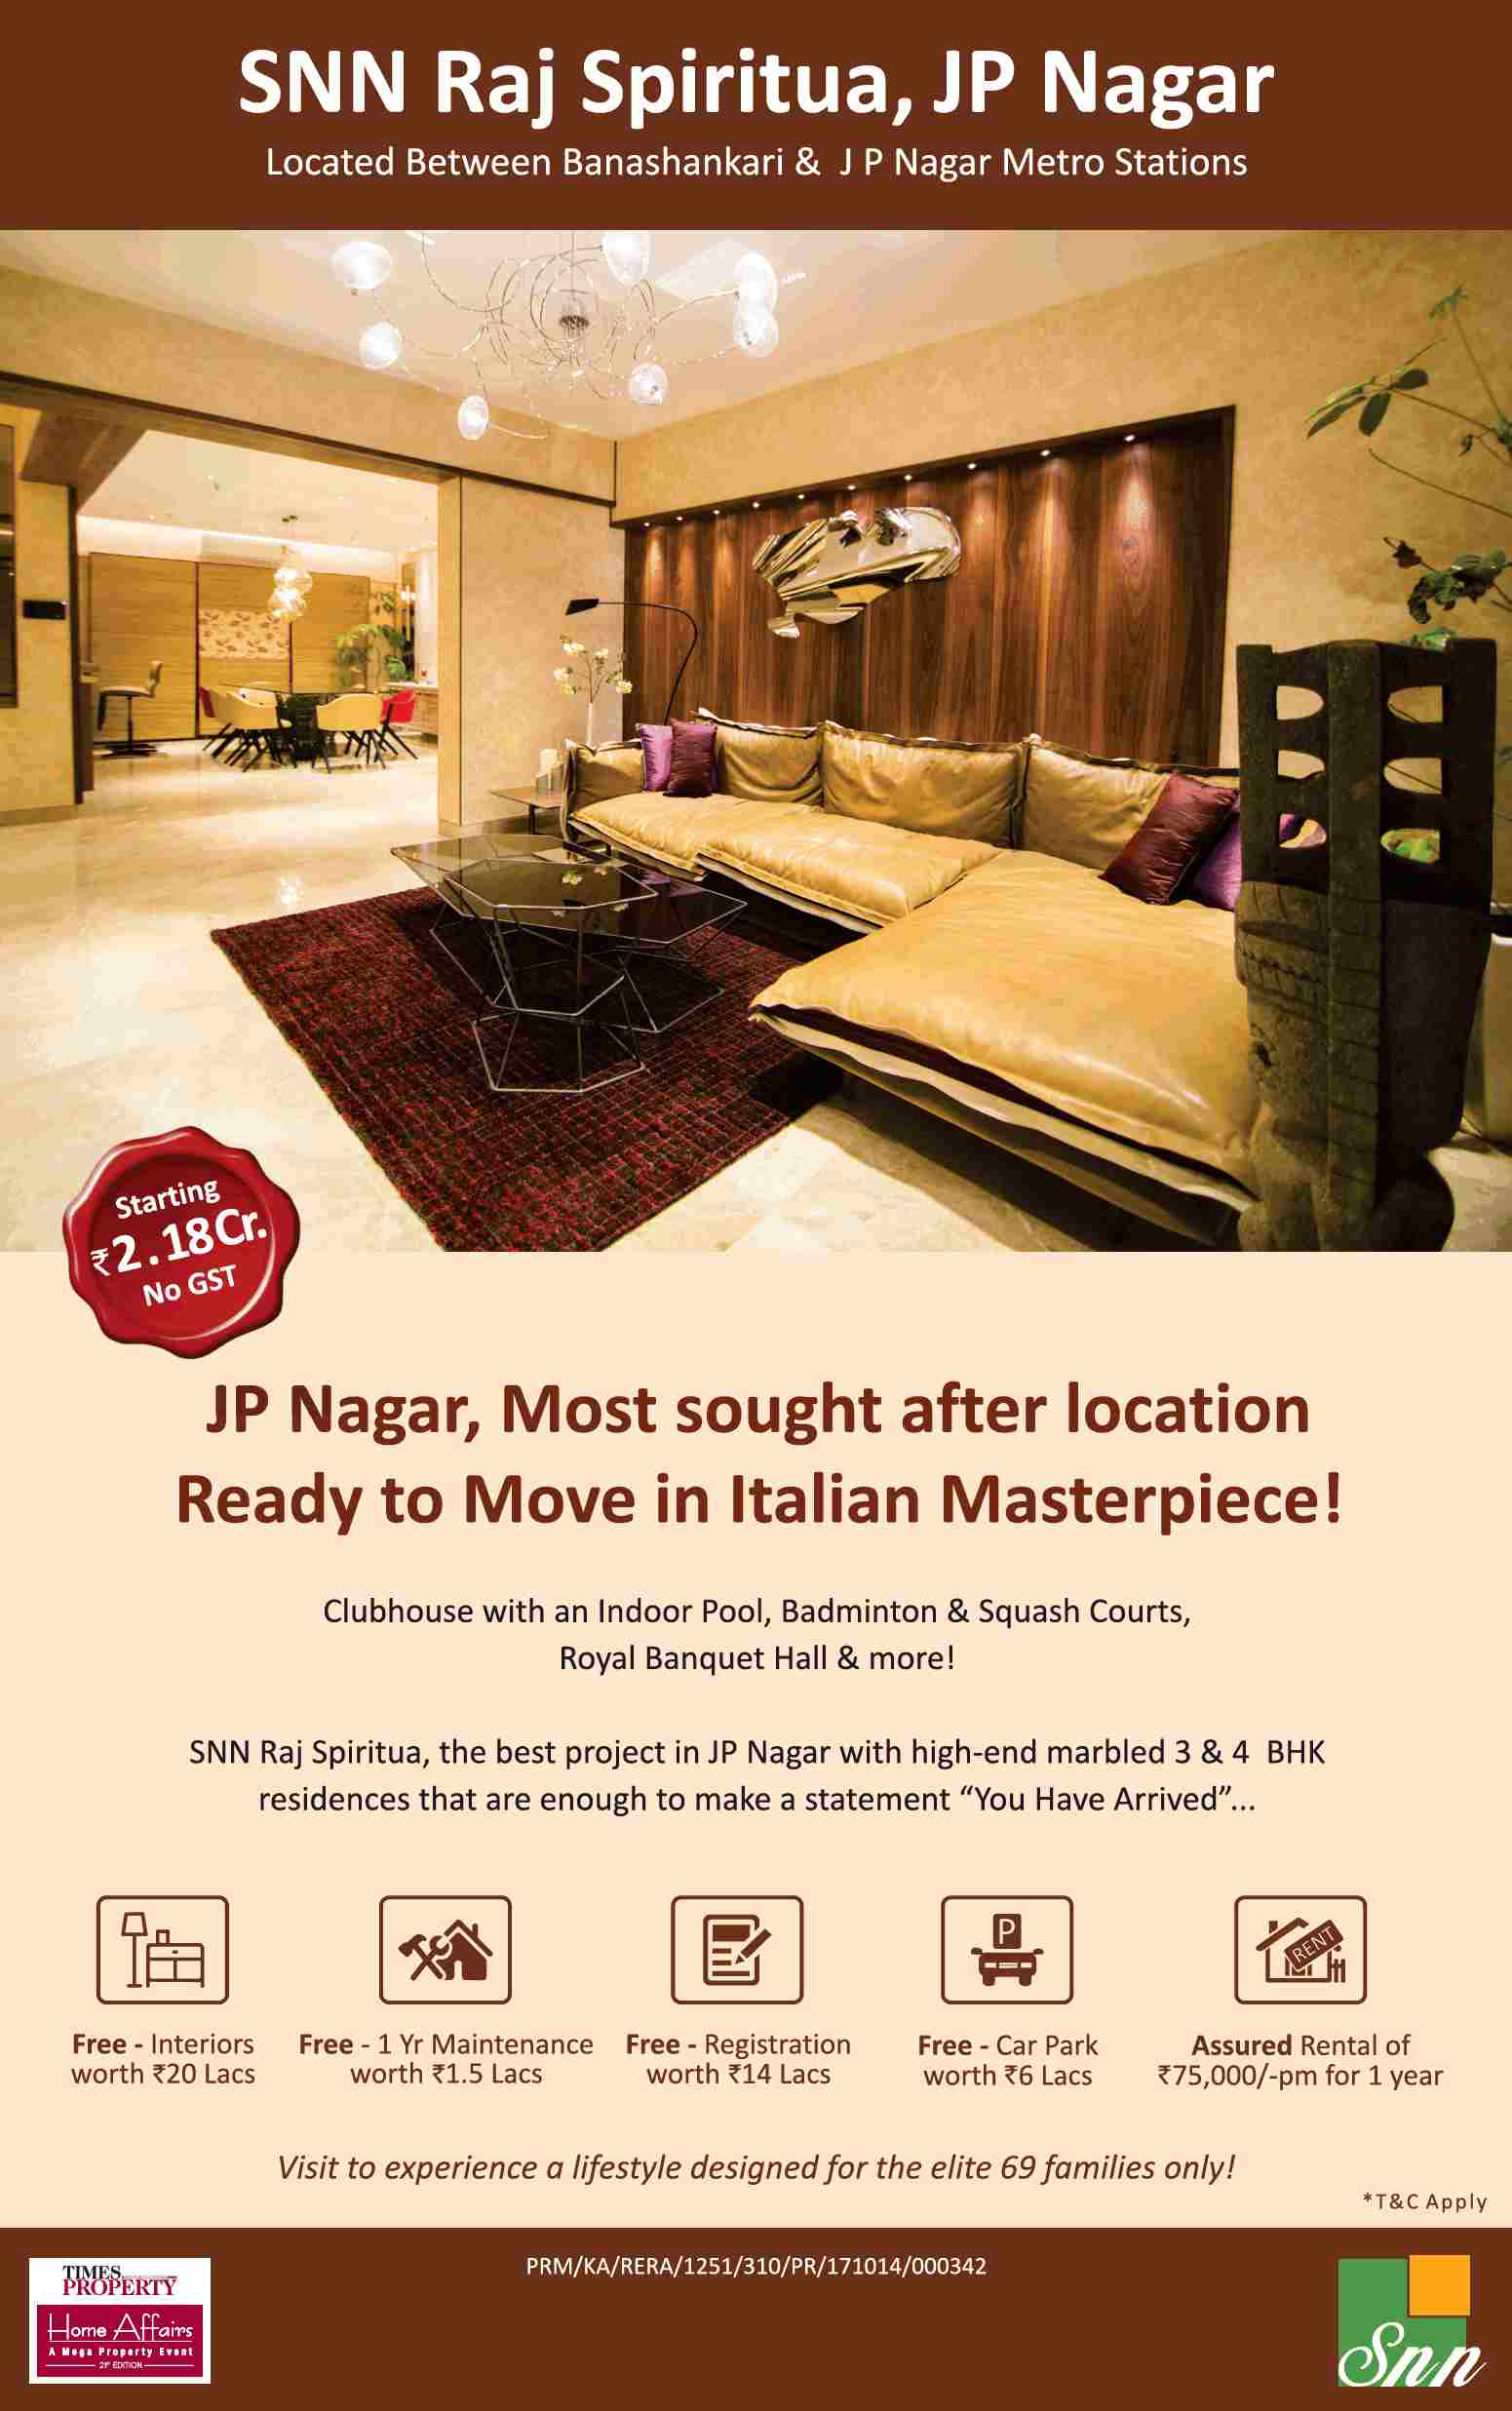 Get assured rental of Rs 75000 per month for 1 year at SNN Raj Spiritua in Bangalore